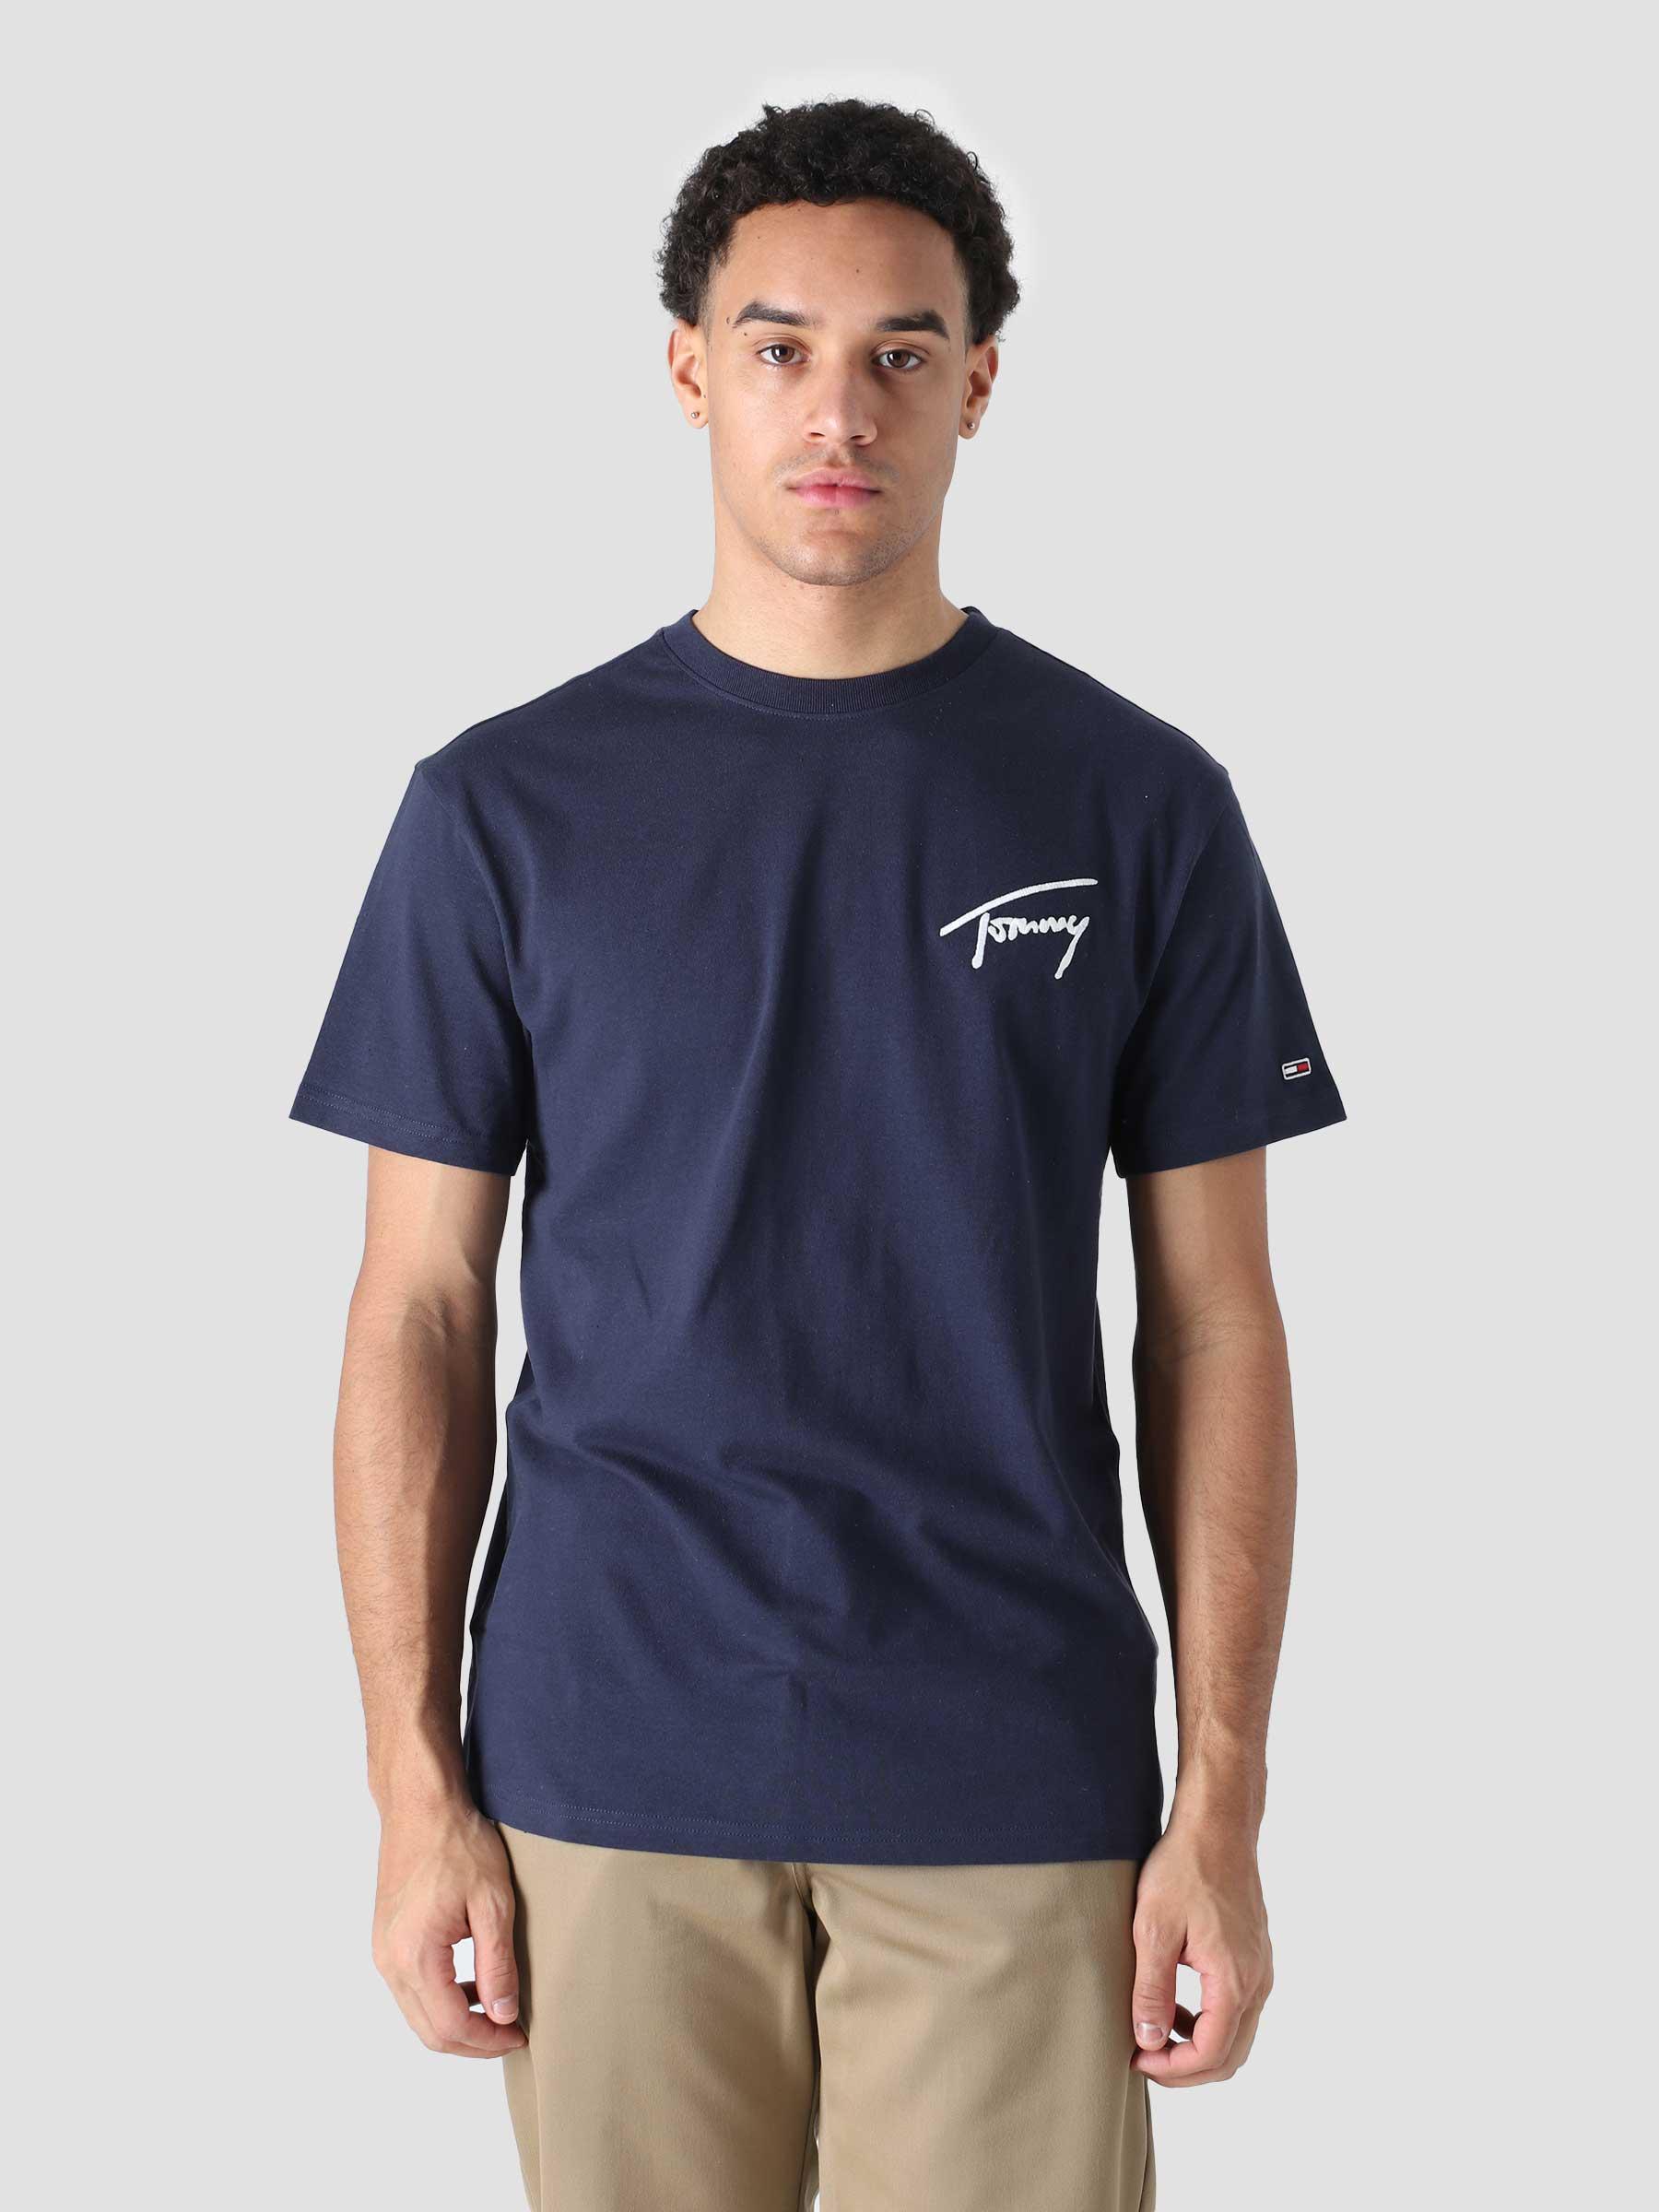 Tommy - Tommy Freshcotton Signature T-Shirt Jeans Navy Twilight TJM